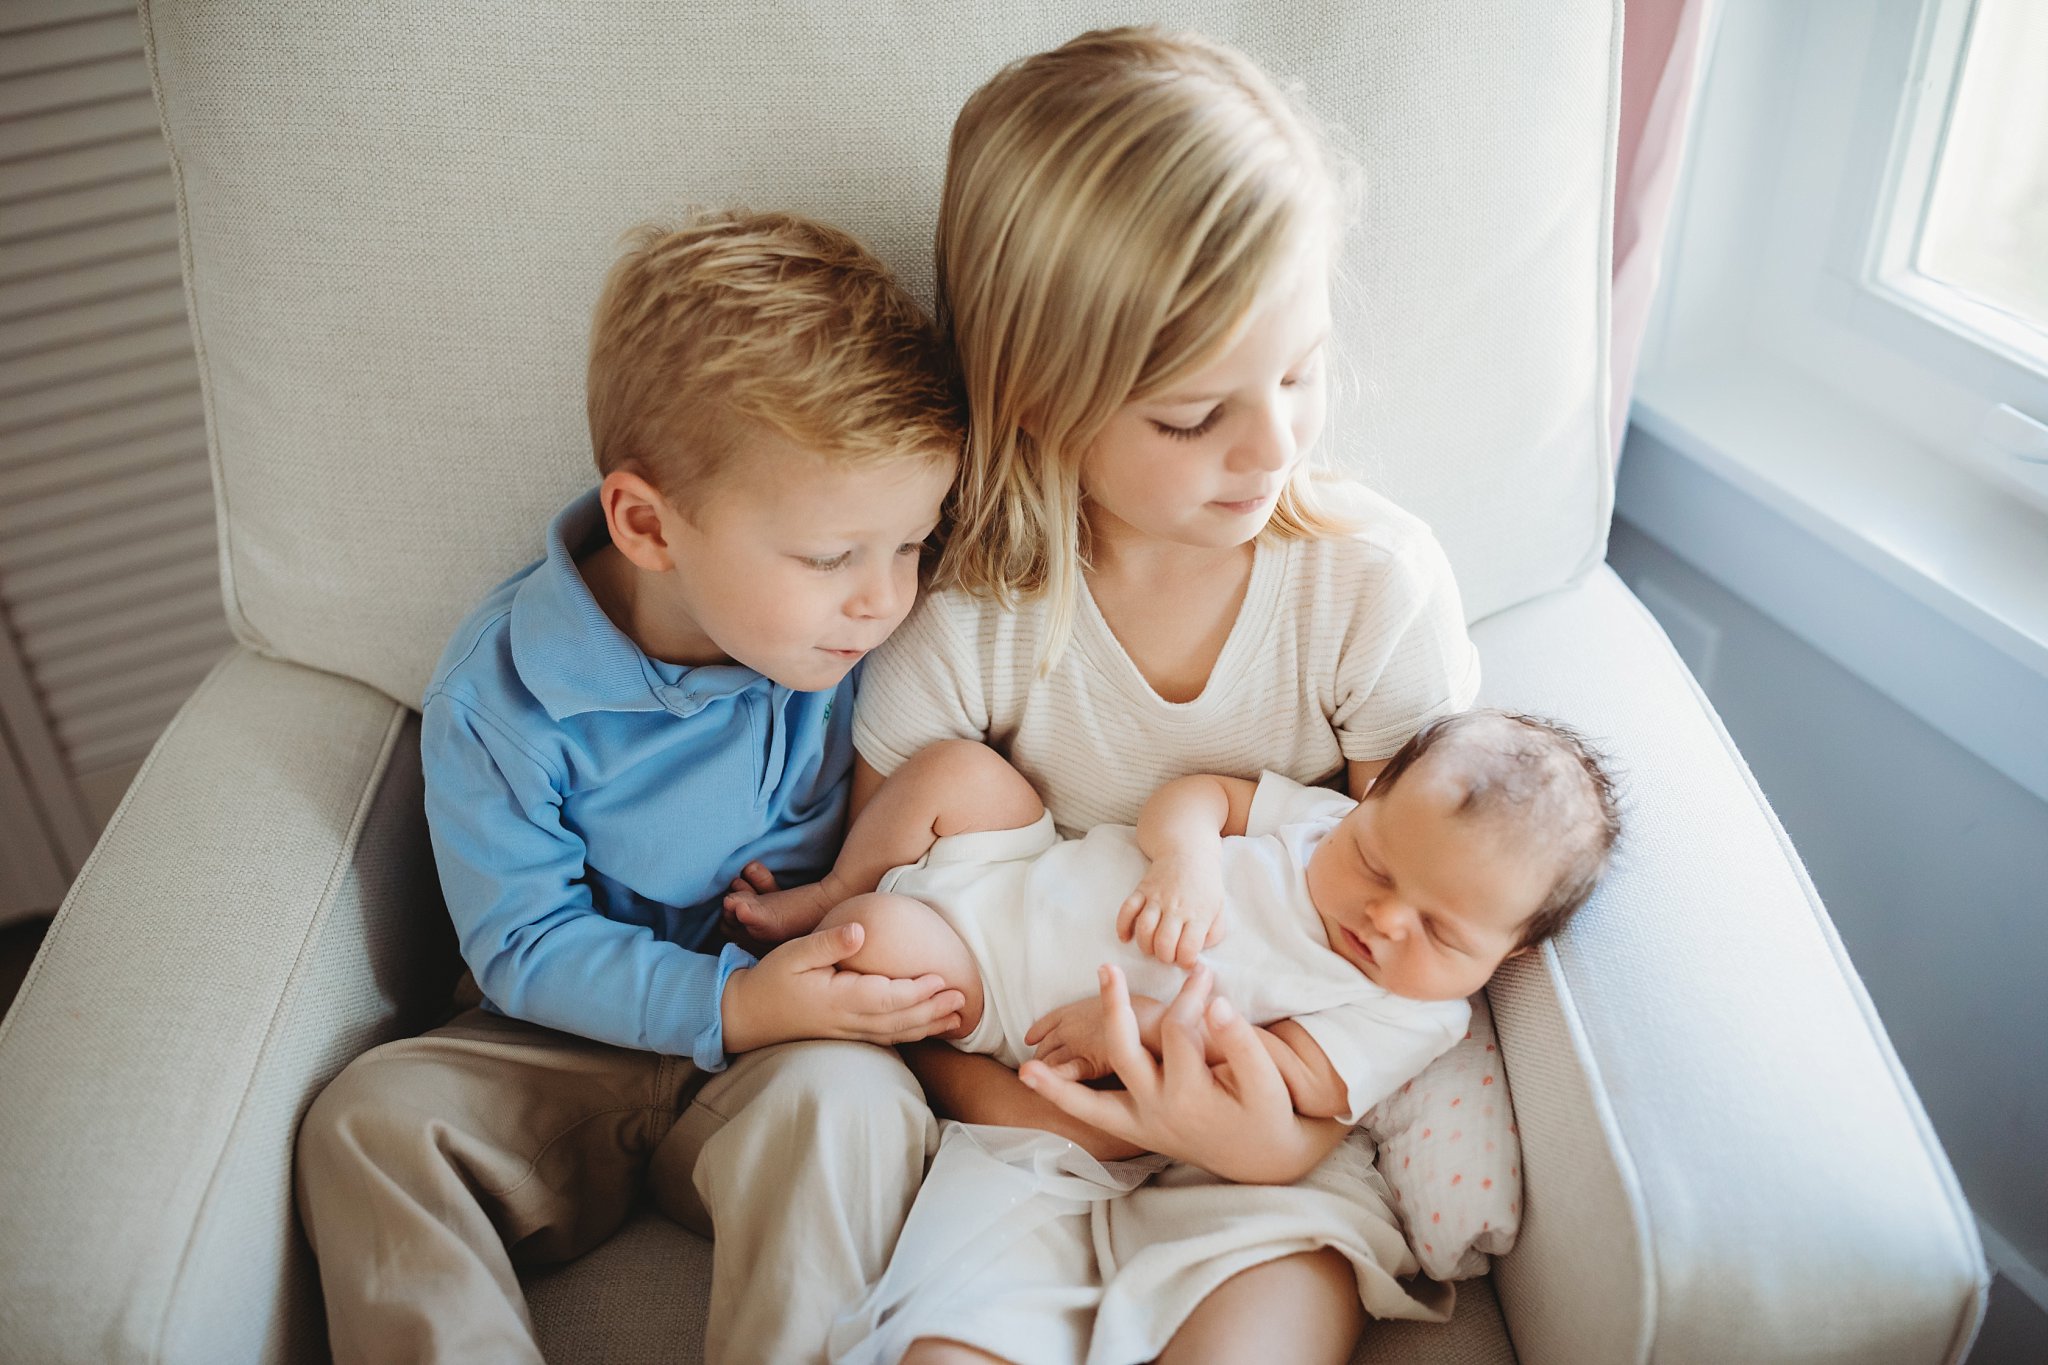 Siblings holding newborn baby